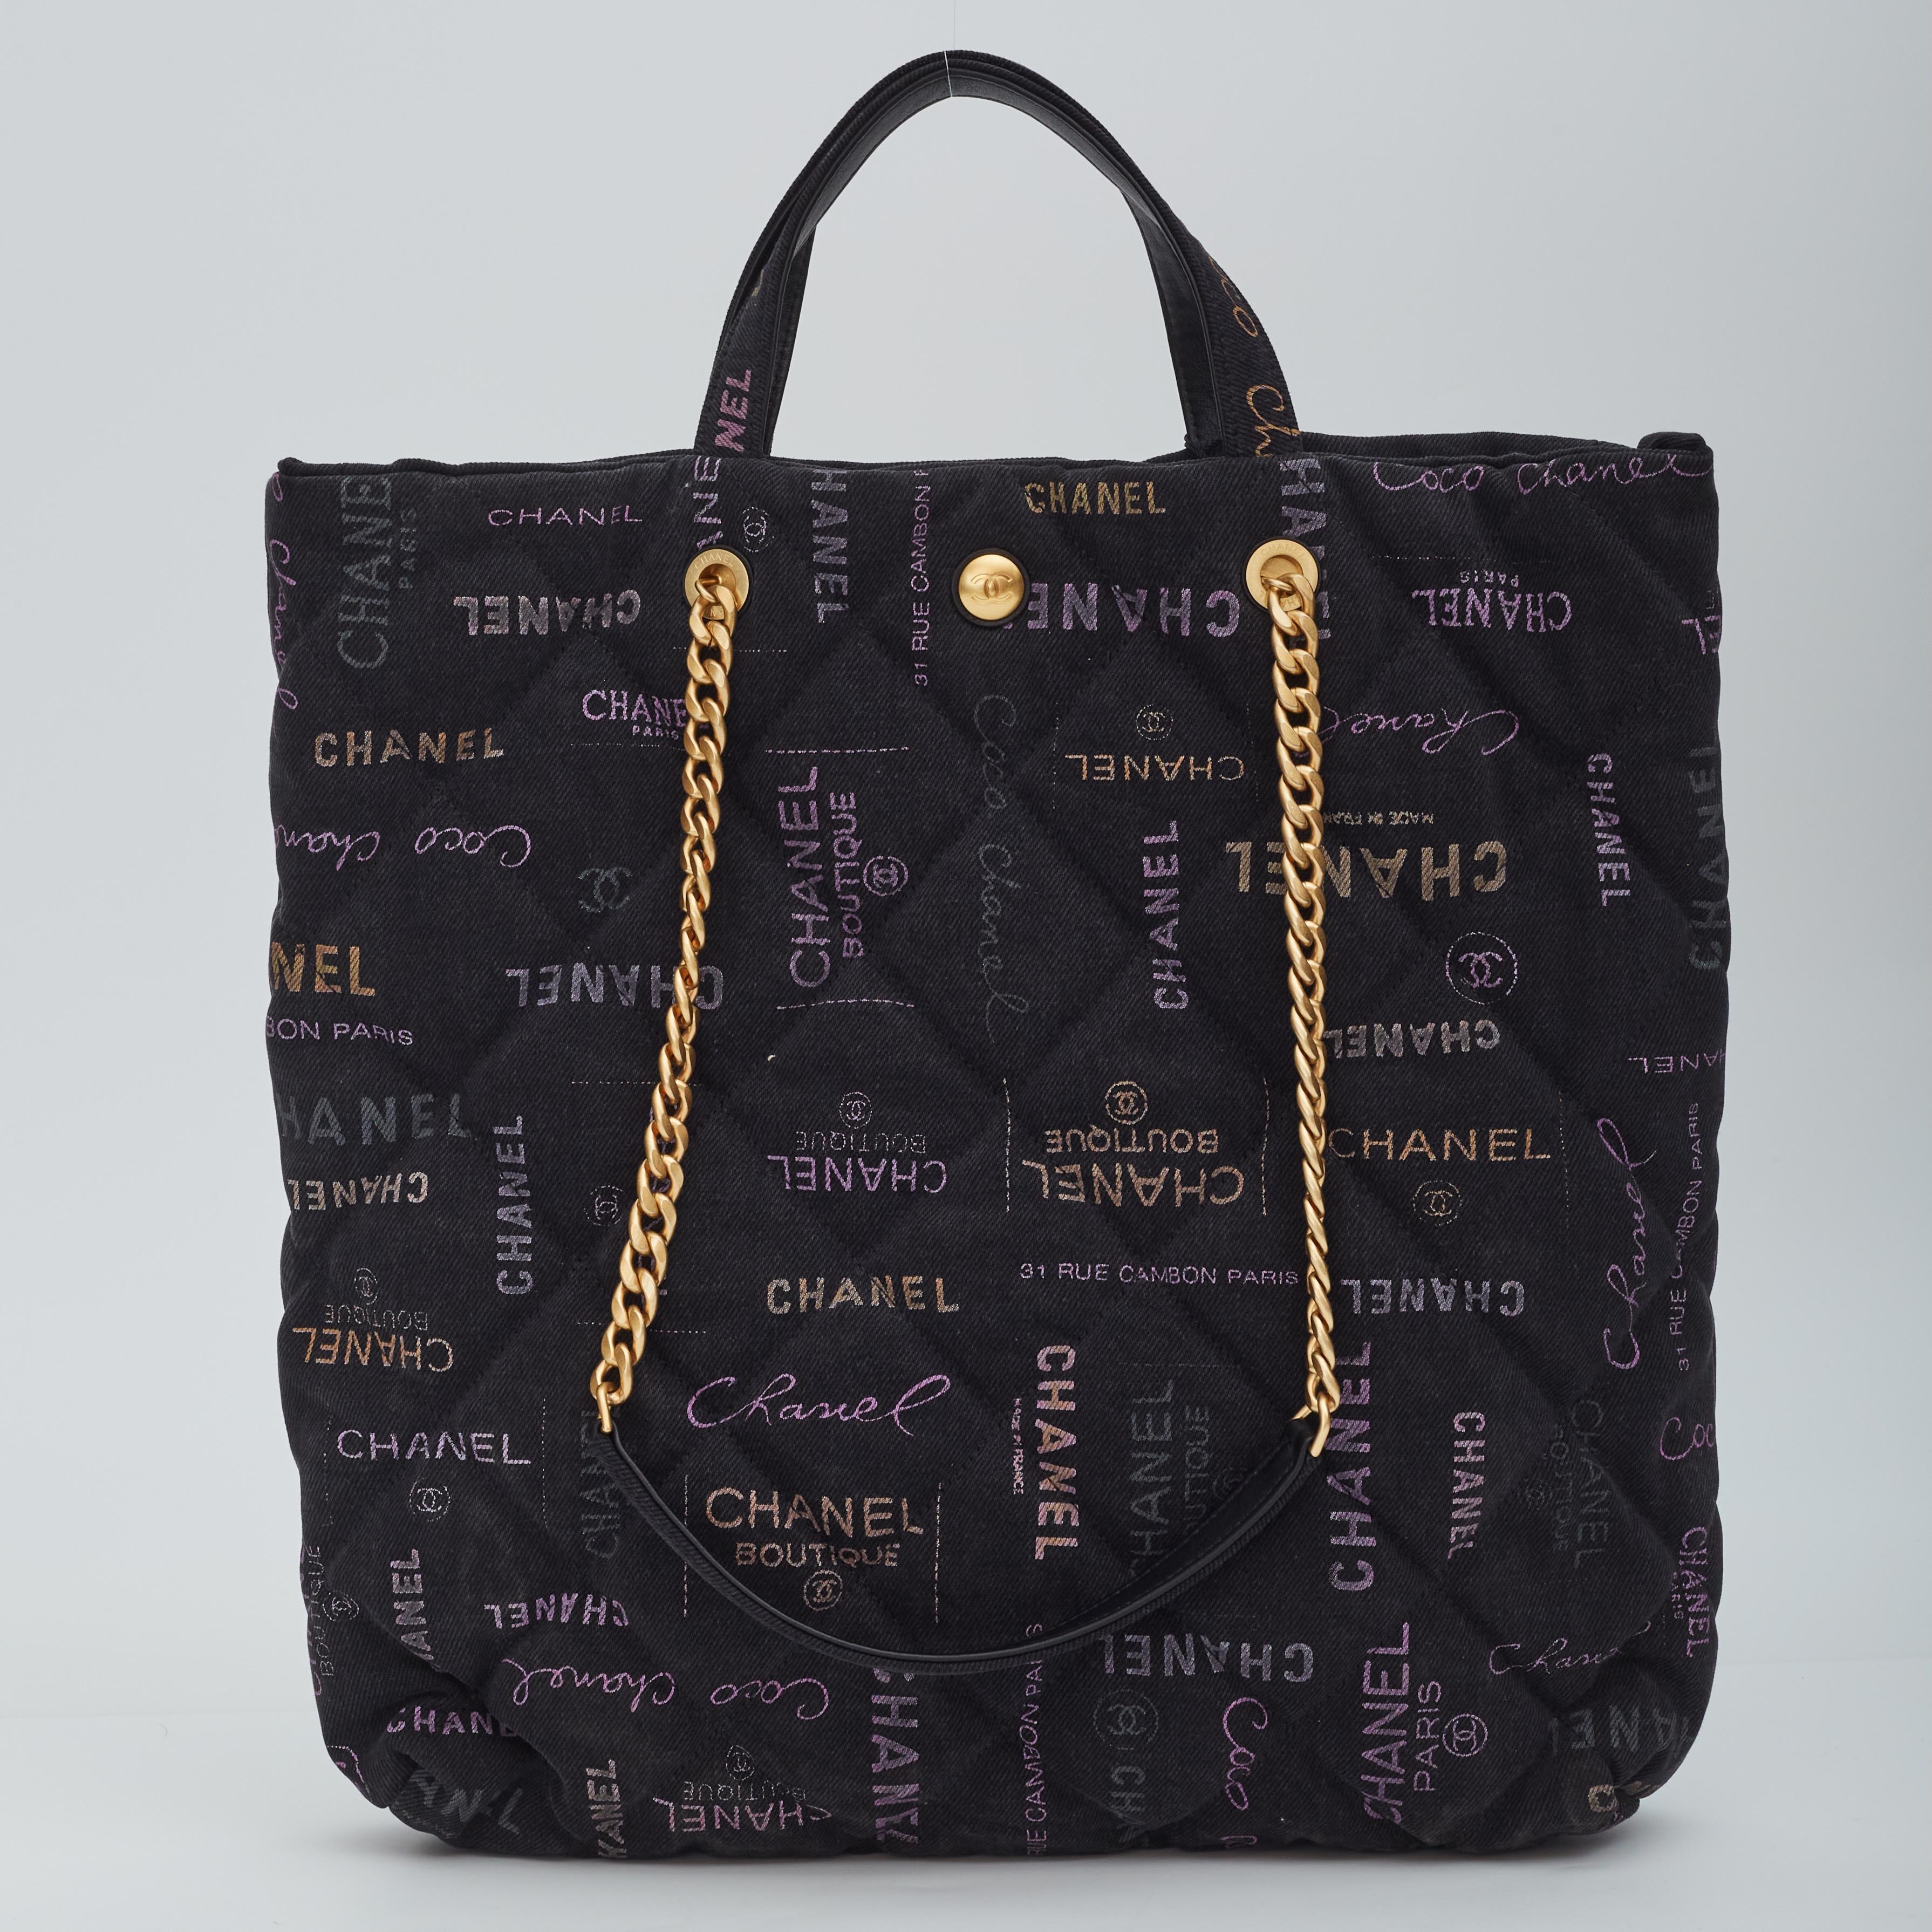 New Chanel Handbags 2021 - 17 For Sale on 1stDibs